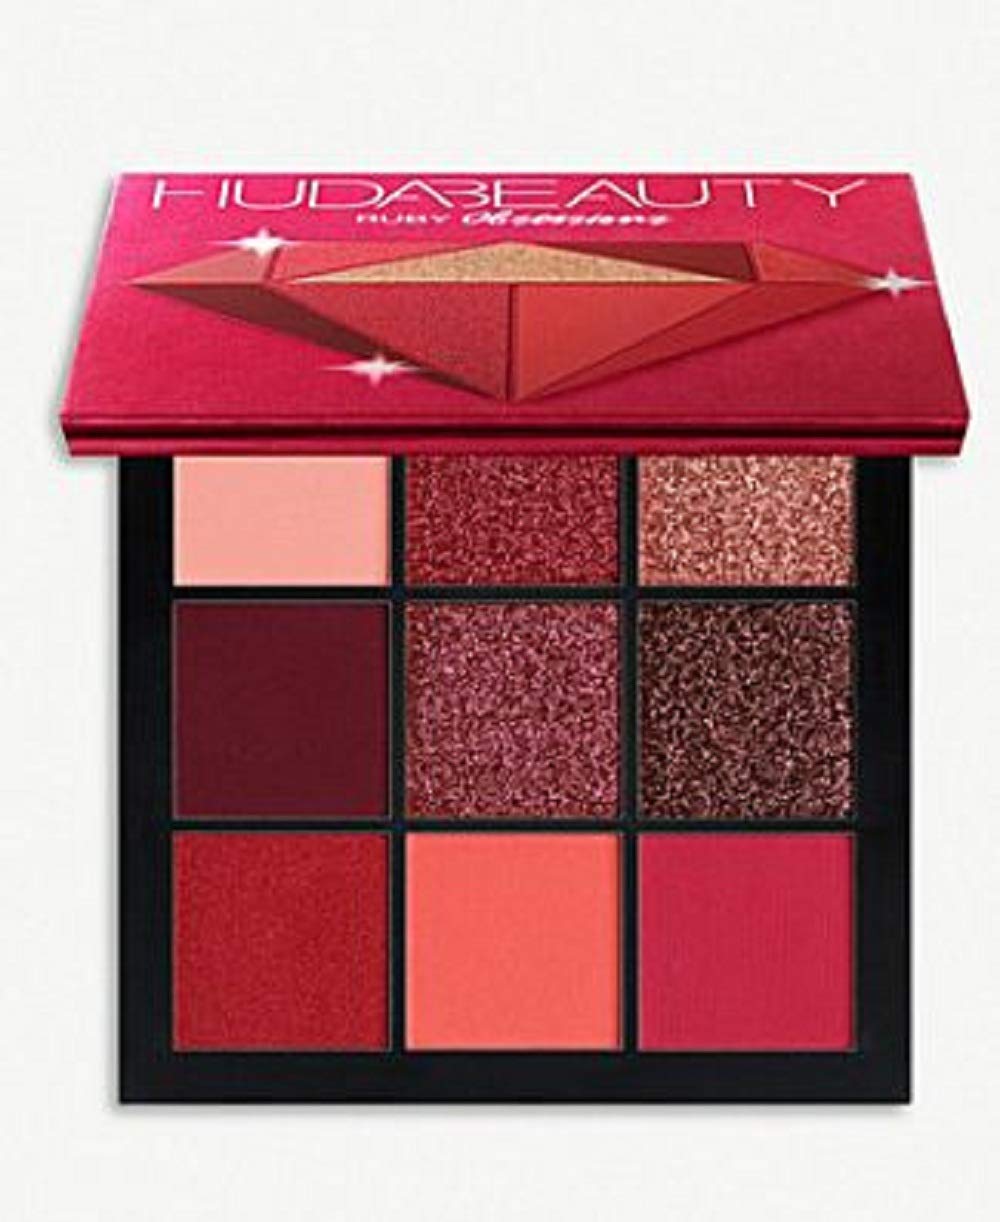 Huda Beauty ruby eyeshadow palette